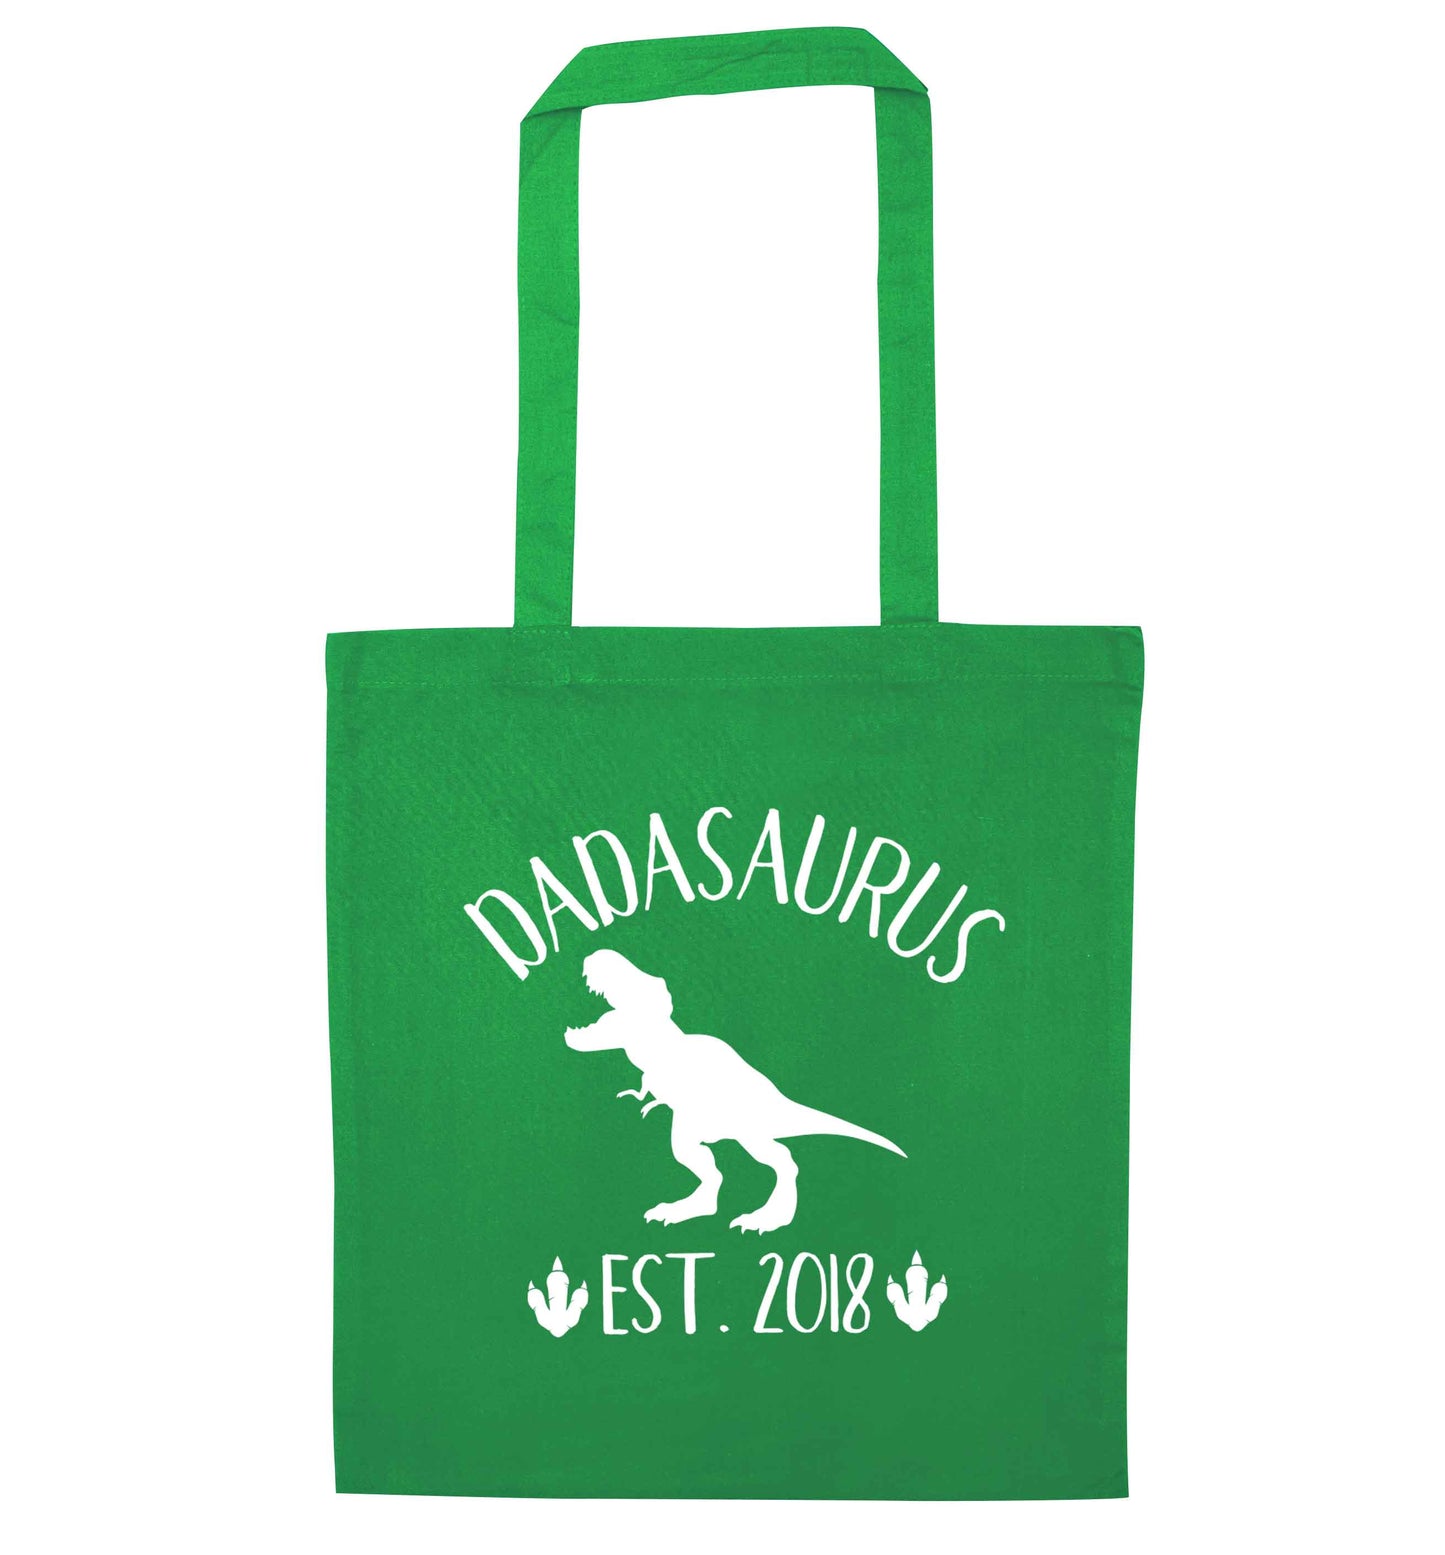 Personalised dadasaurus since (custom date) green tote bag